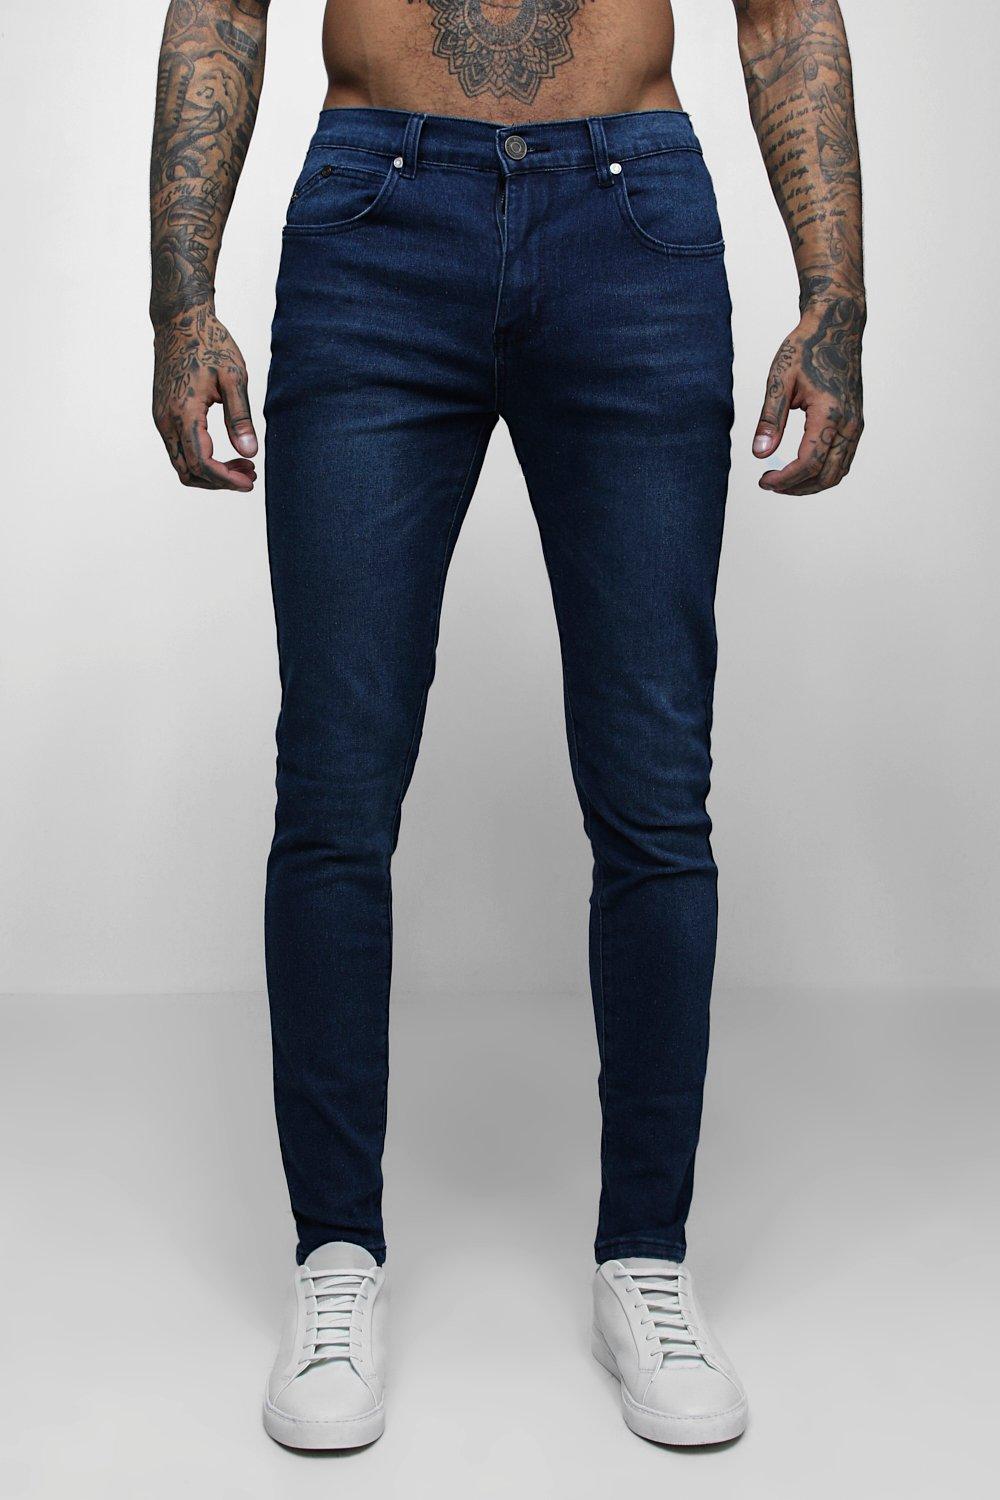 levi 529 curvy straight jeans